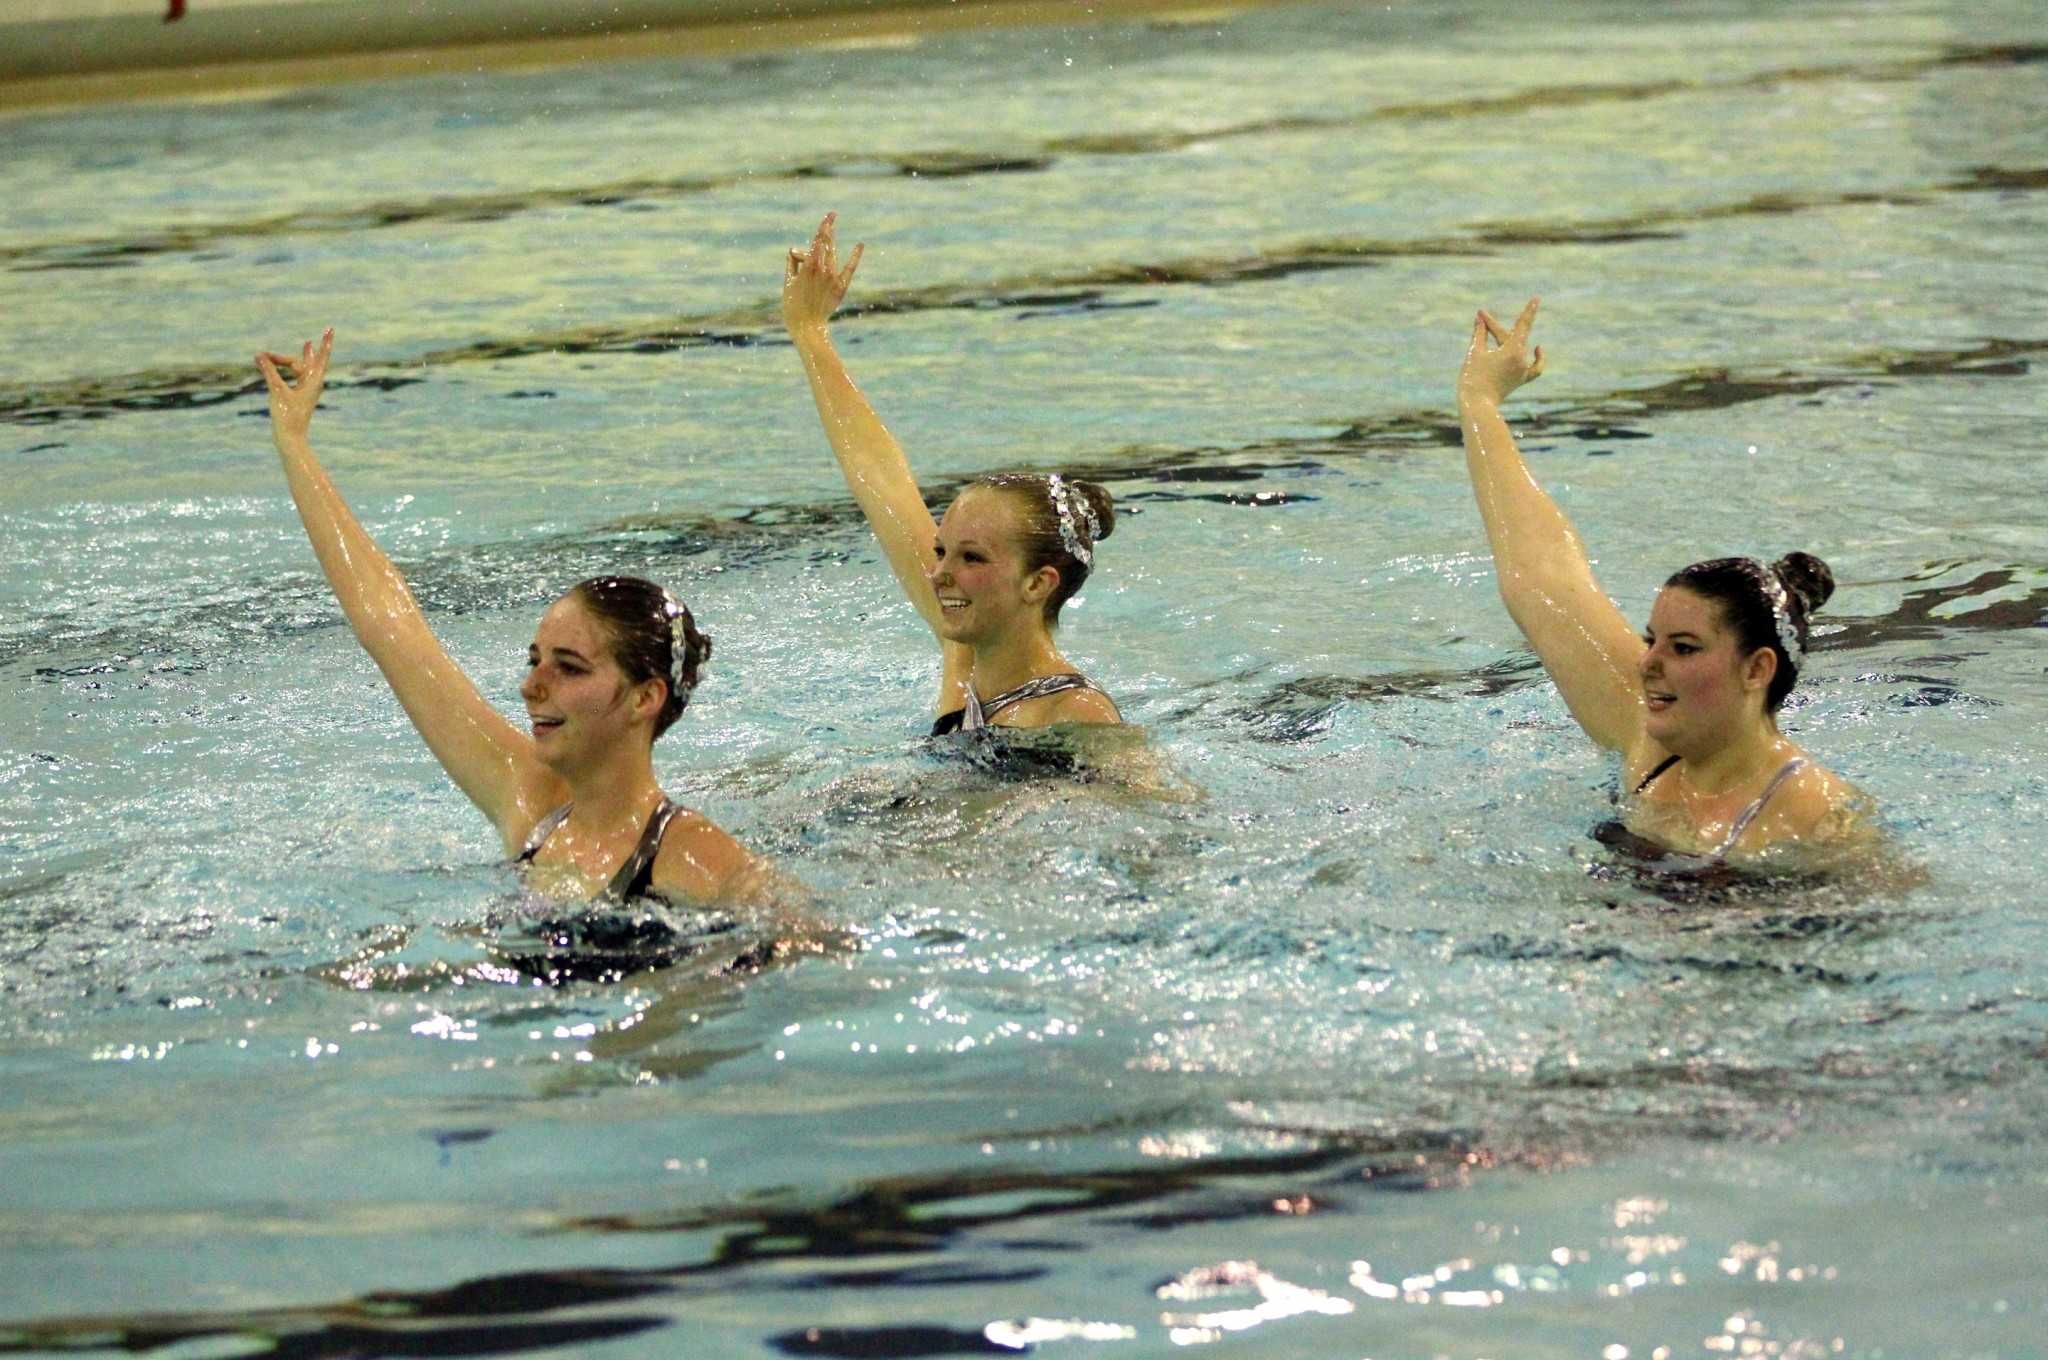 CSU Synchronized swimming team